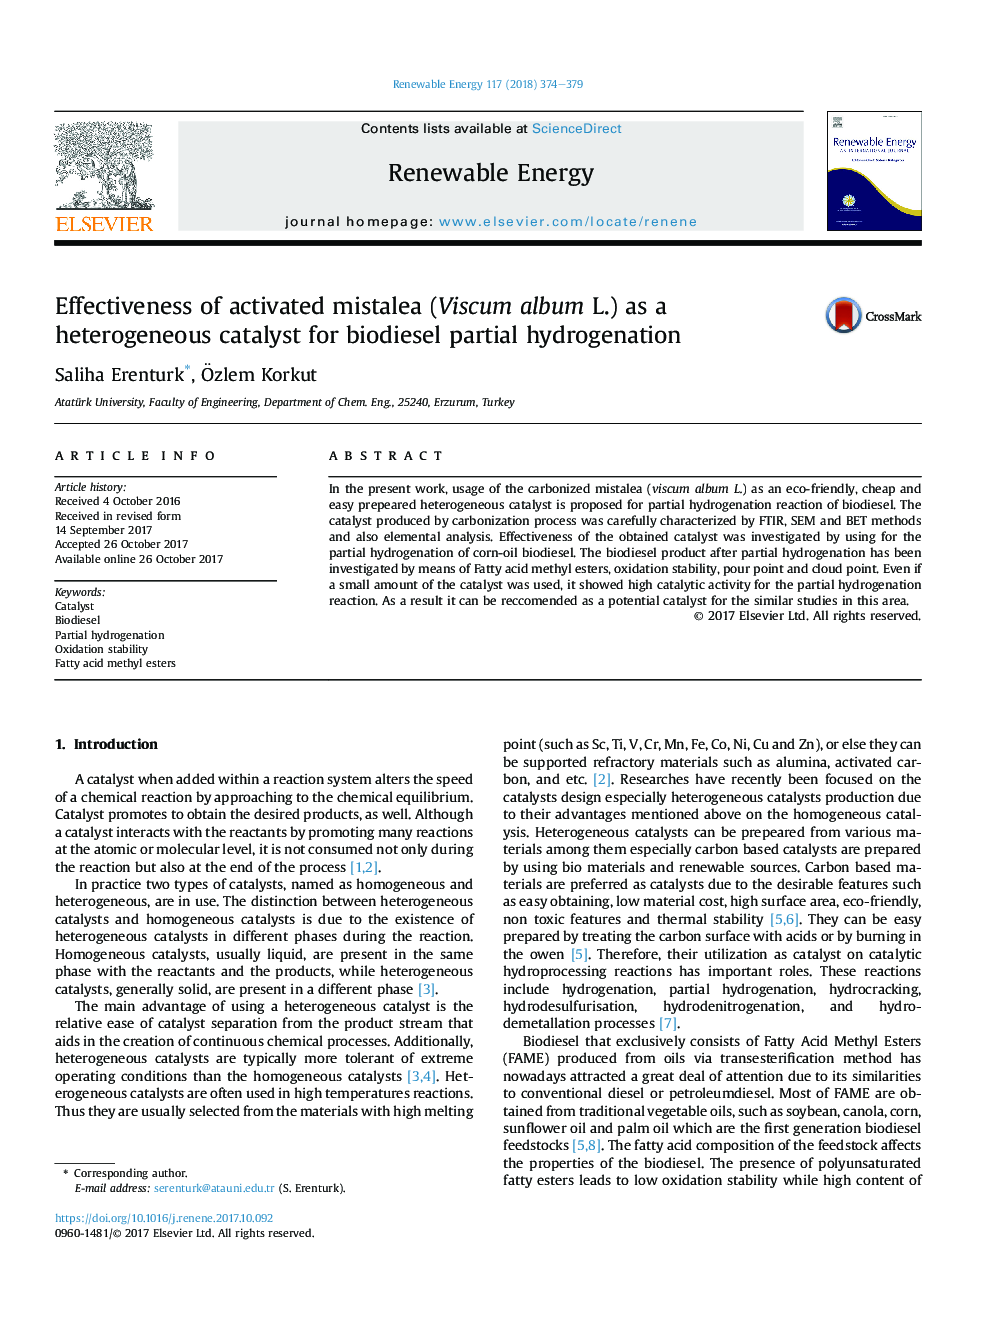 Effectiveness of activated mistalea (Viscum album L.) as a heterogeneous catalyst for biodiesel partial hydrogenation